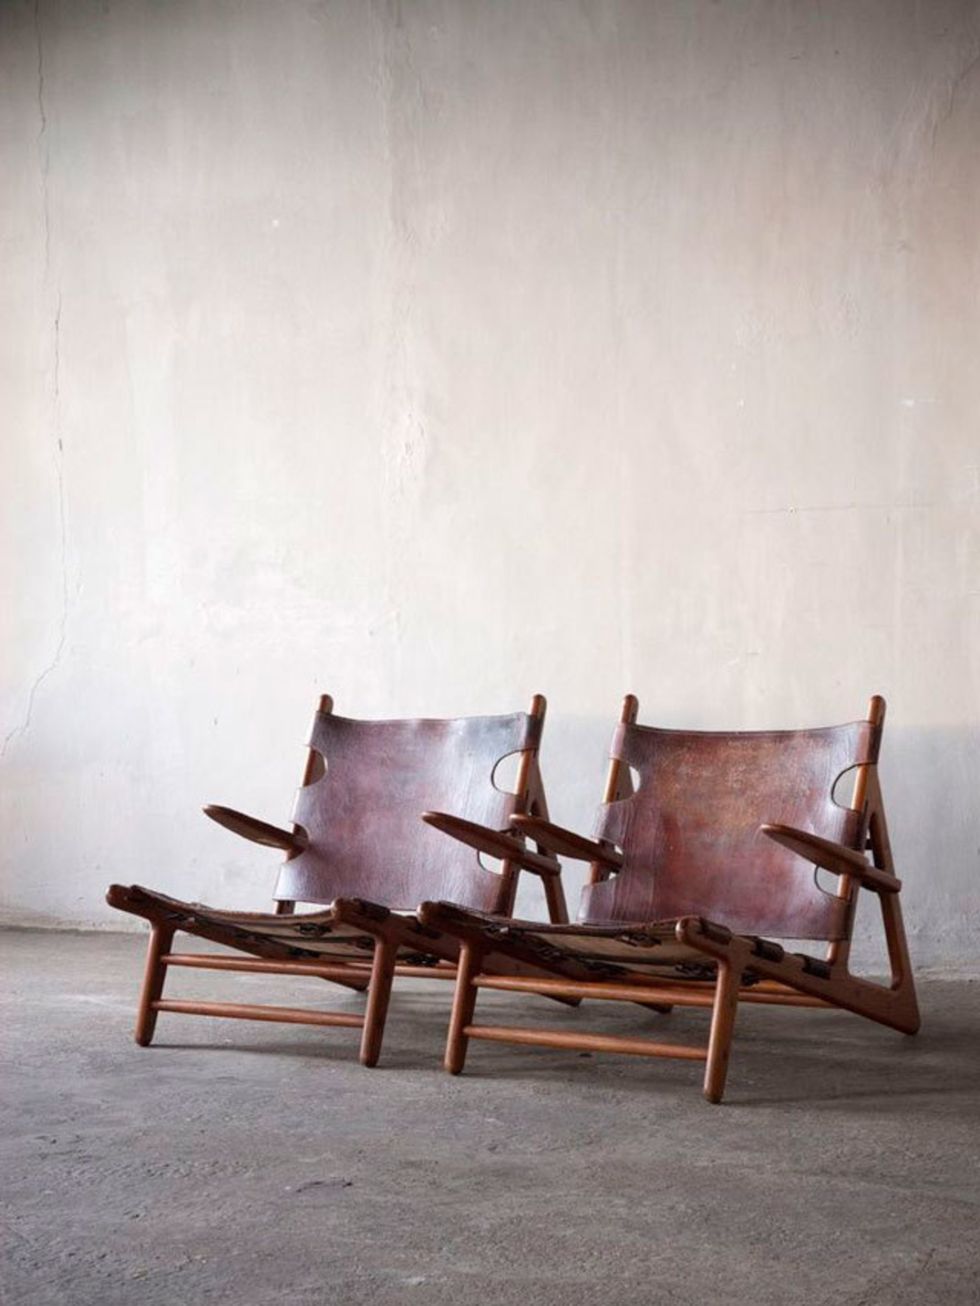 Wood, Chair, Hardwood, Still life photography, Stock photography, 